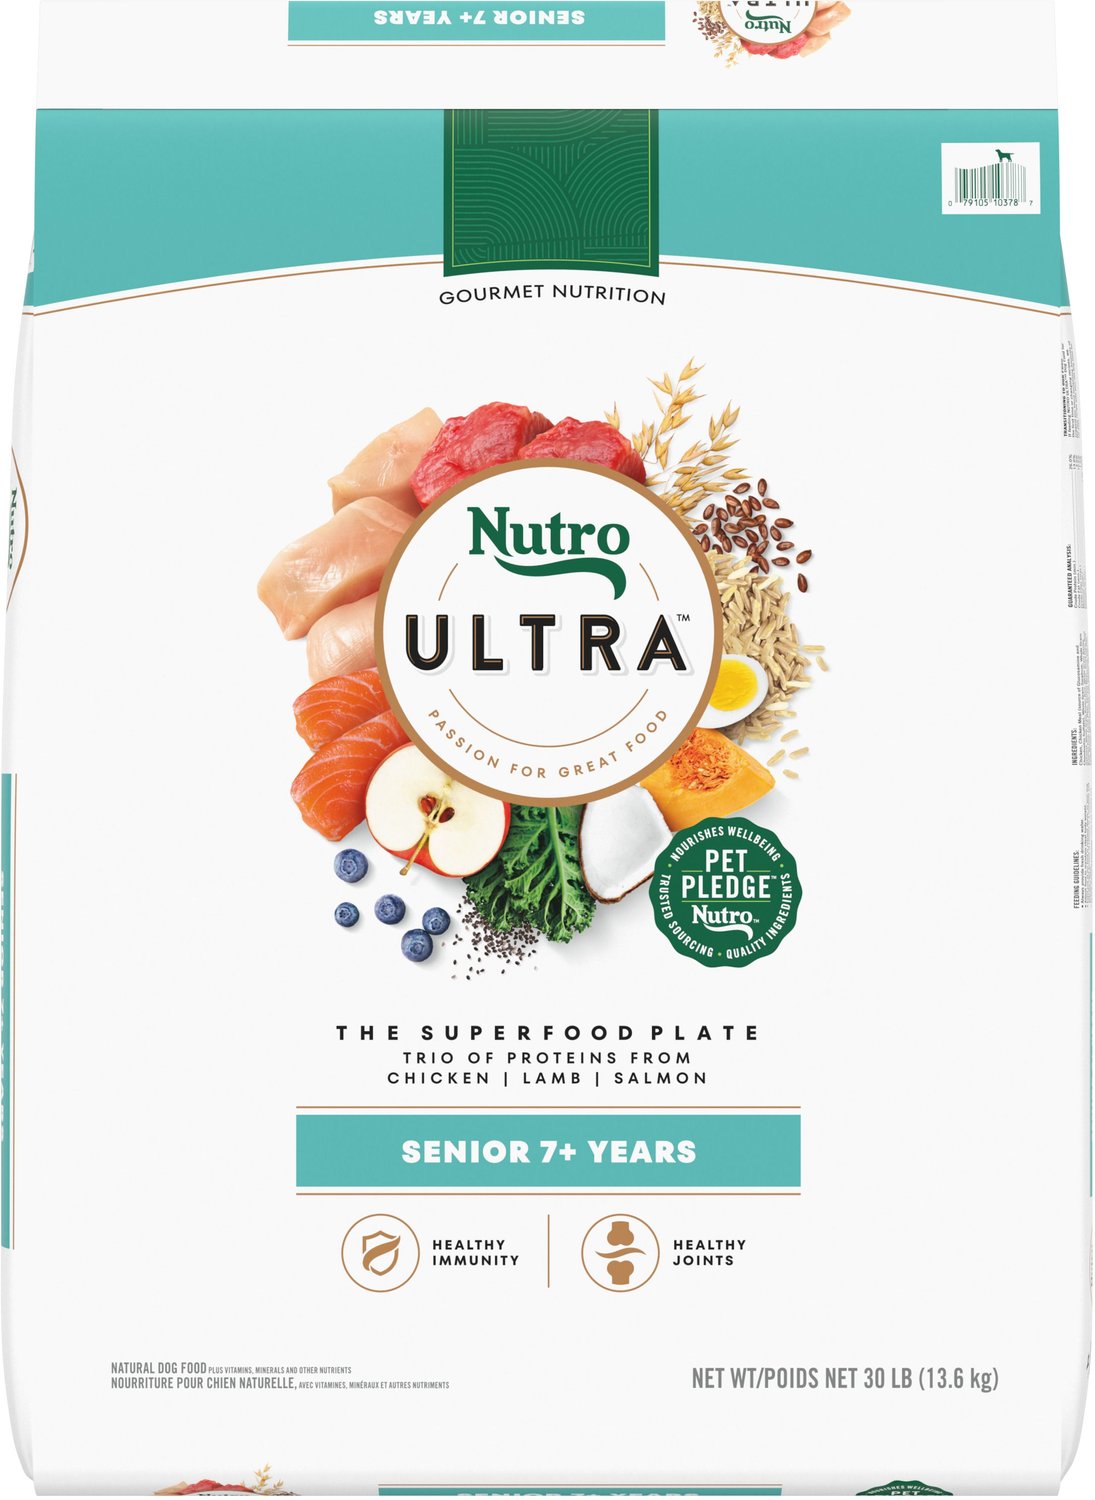 Nutro Ultra Senior Dry Dog Food